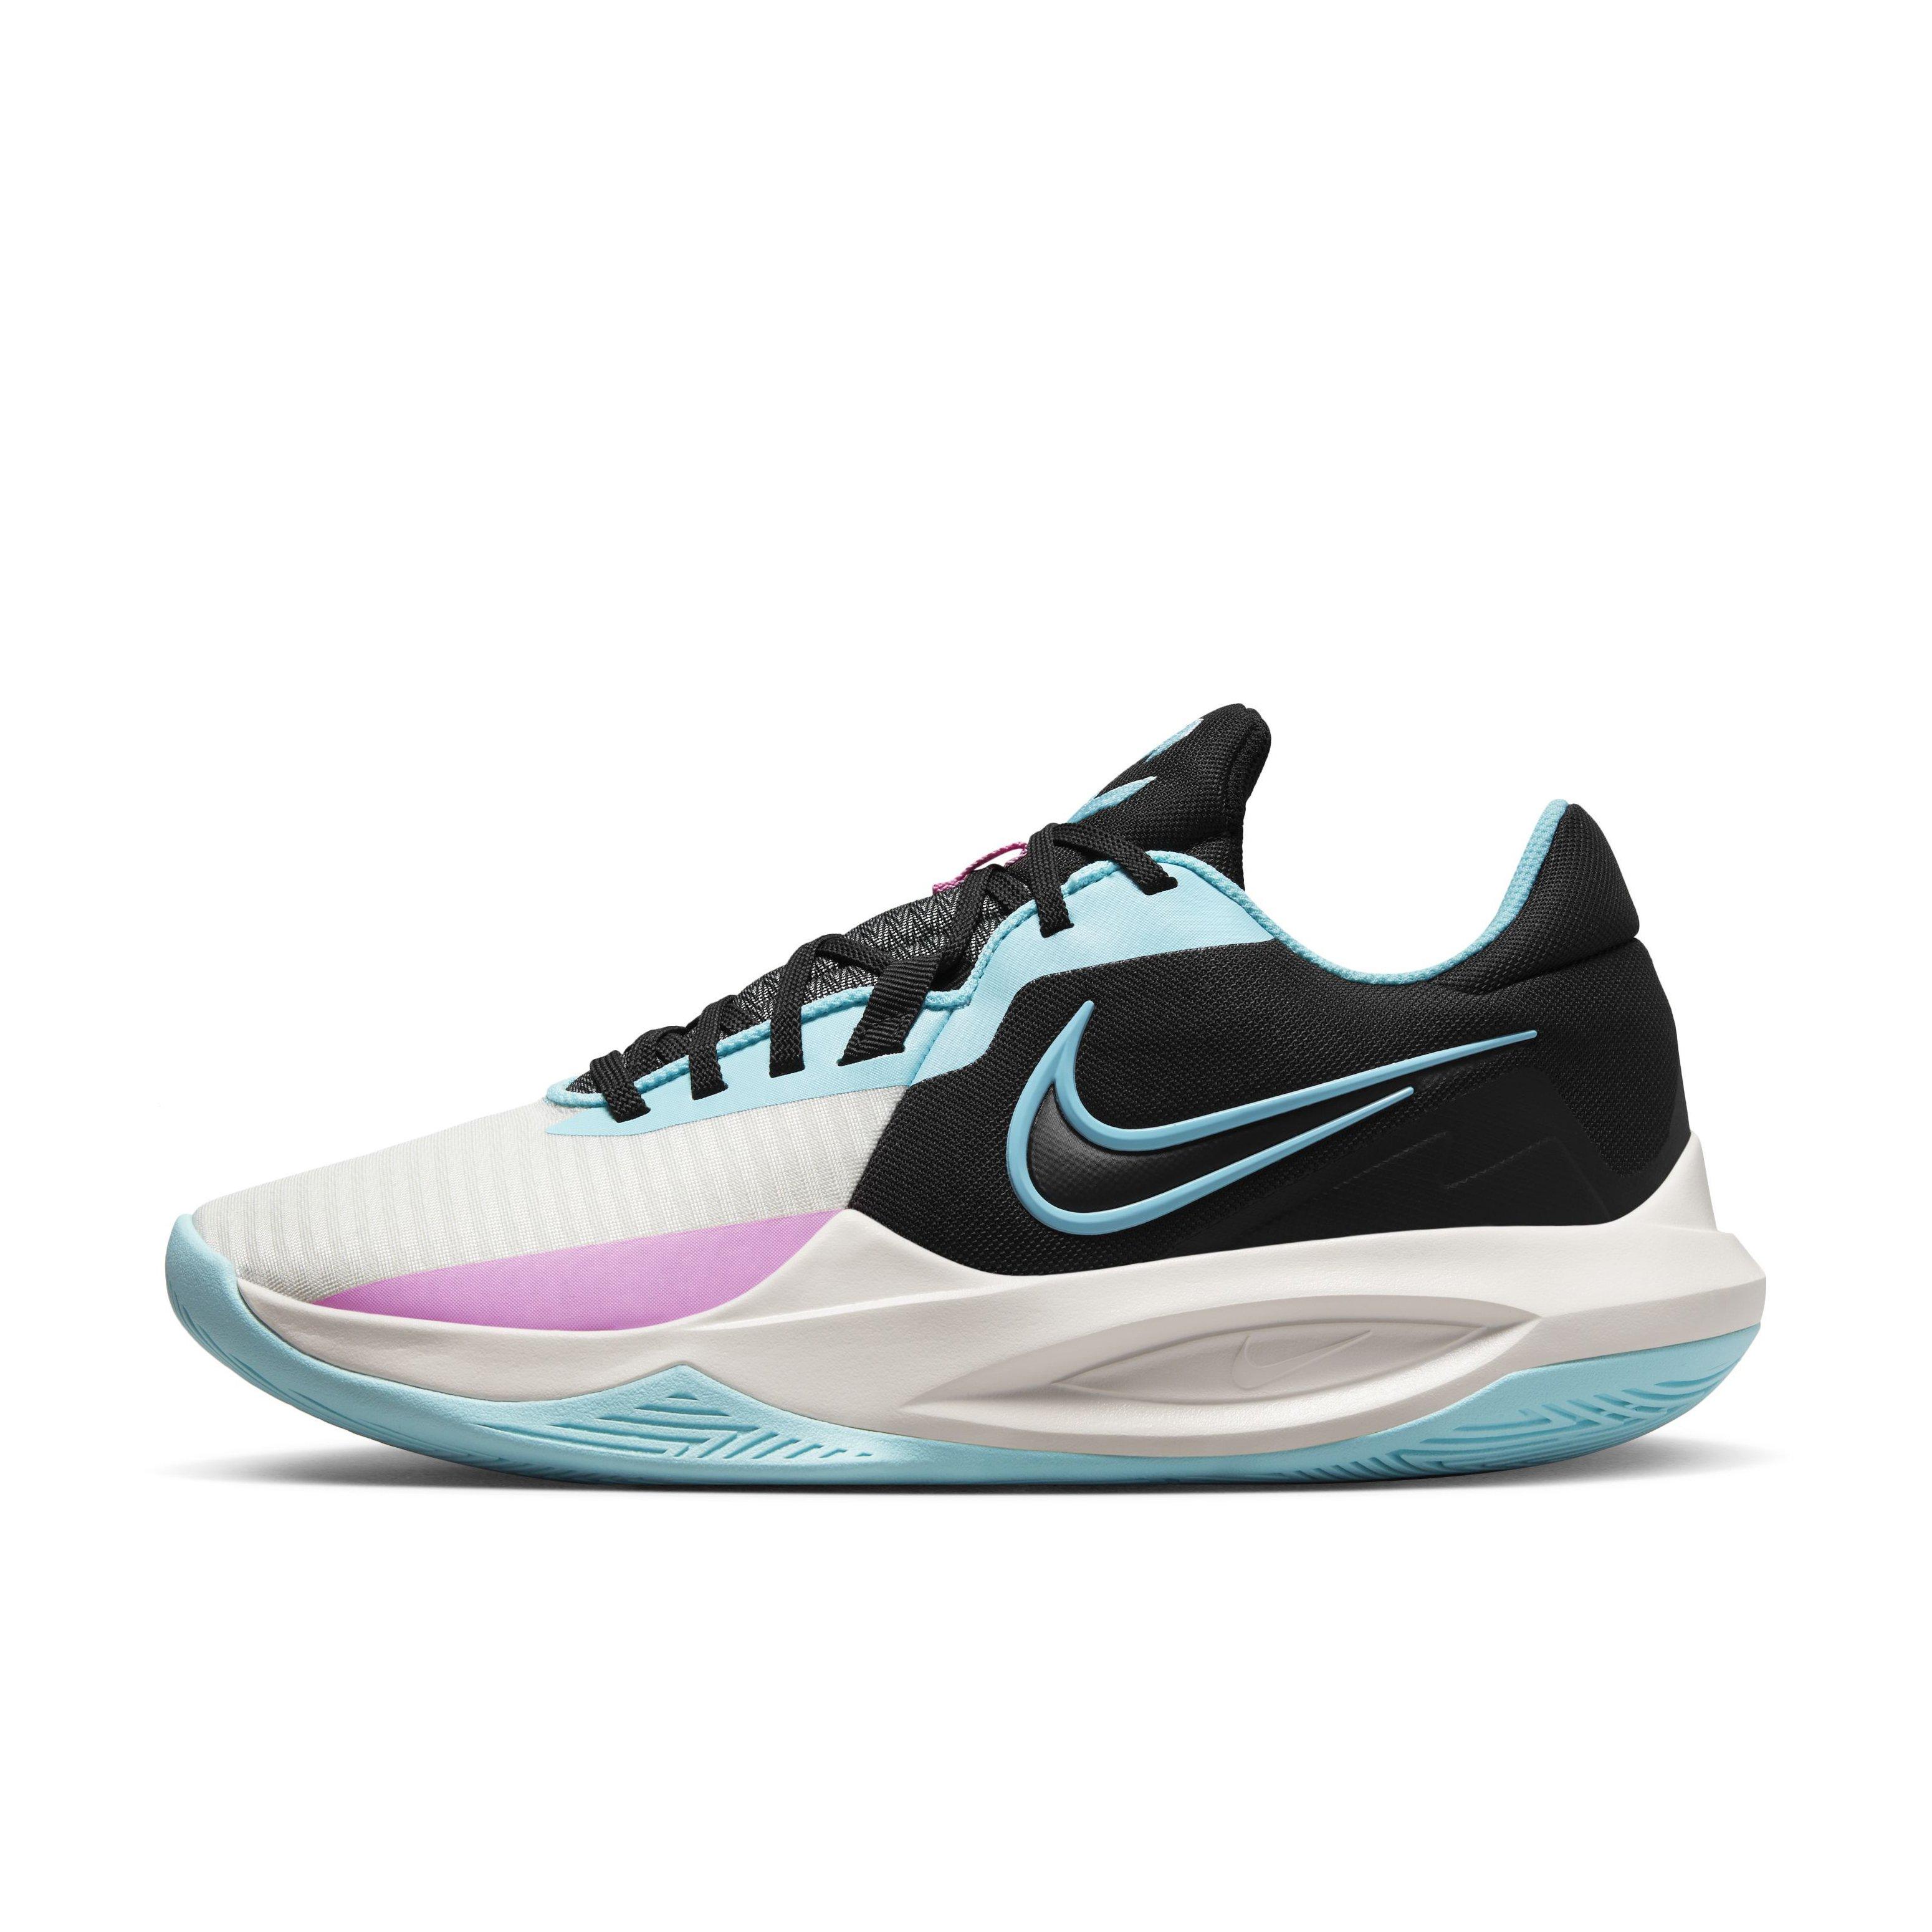 Nike Precision "Sail/Phantom/Black/Copa" Men's Basketball Shoe